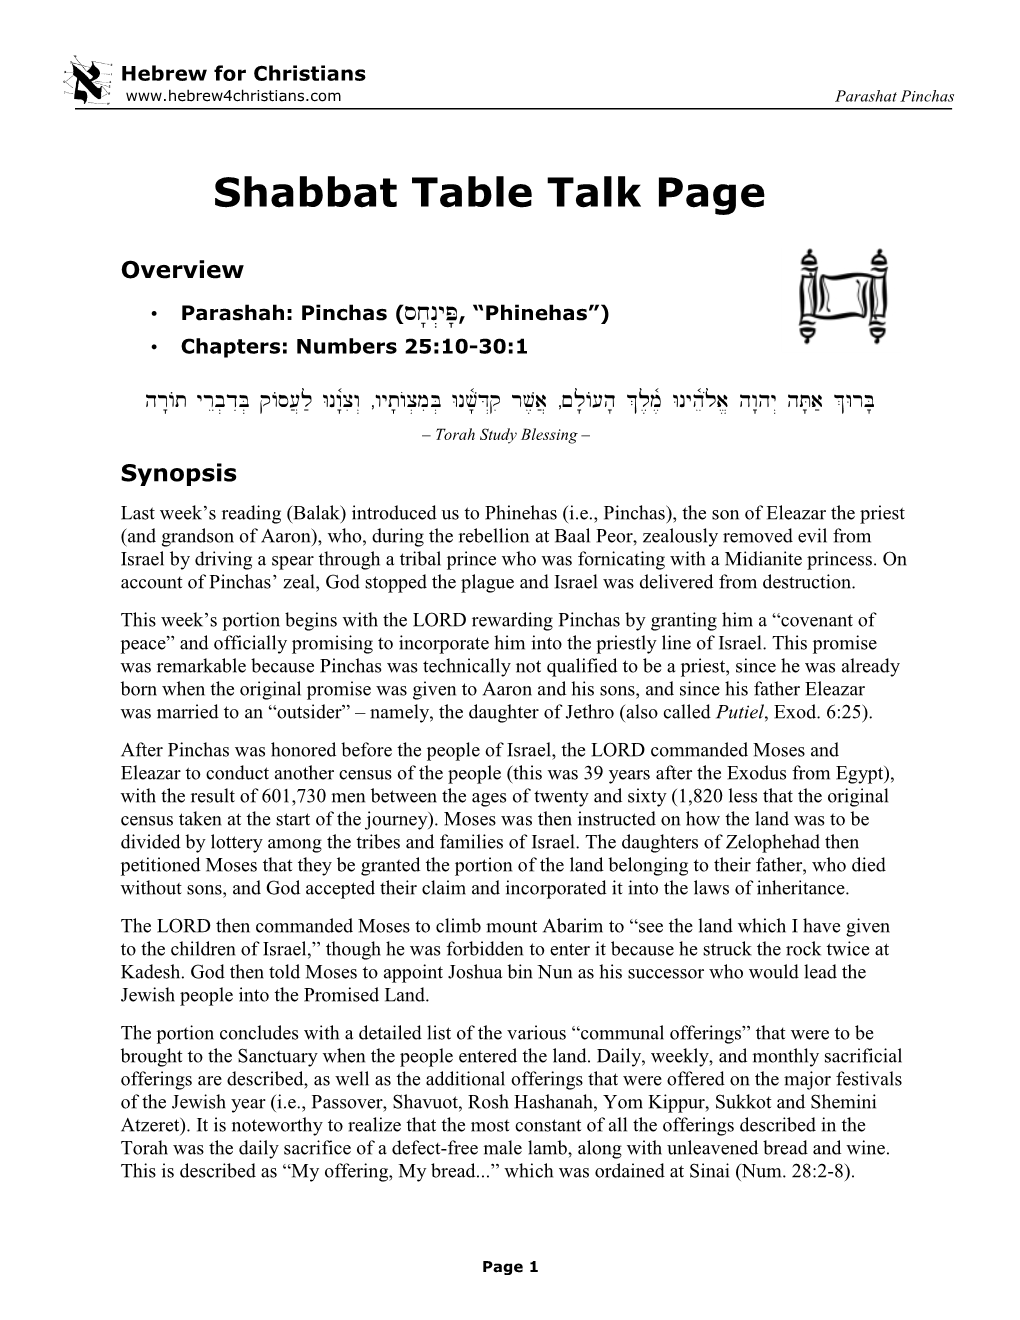 Shabbat "Table Talk" for Pinchas